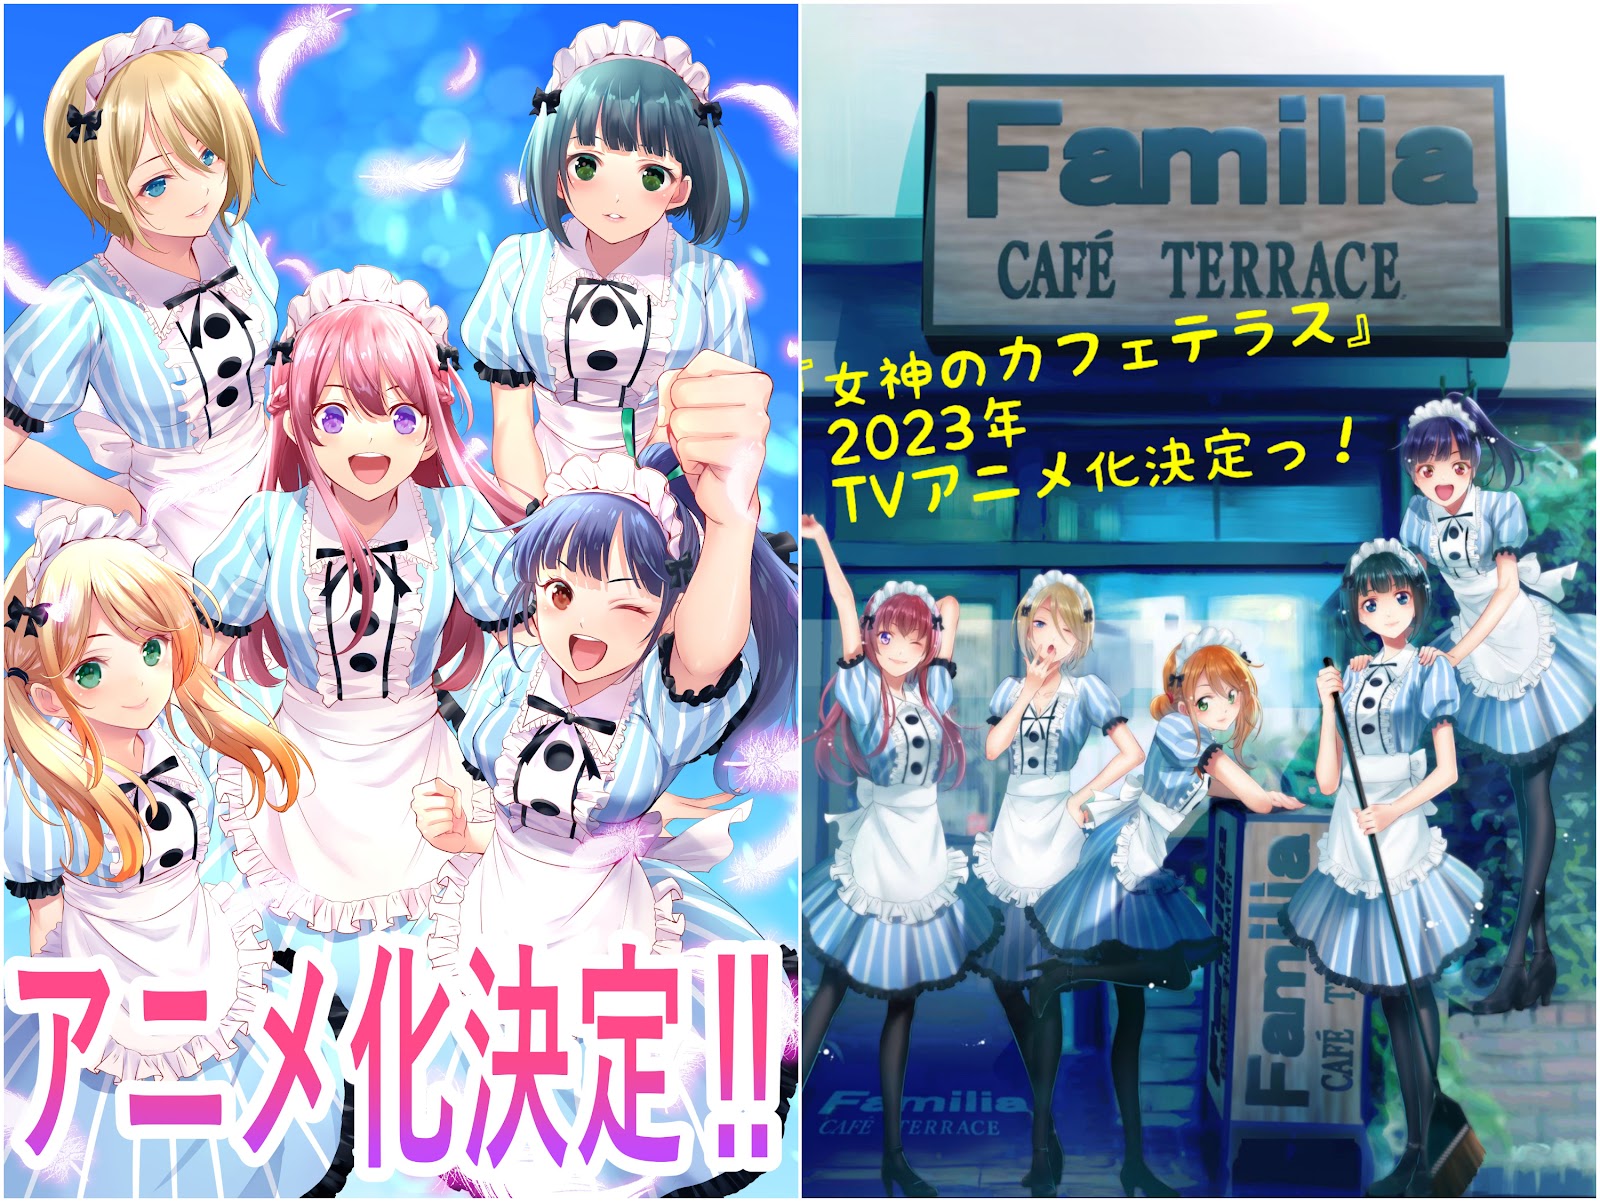 Megami no Café Terrace, 女神のカフェテラス, The Café Terrace and Its Goddesses, Goddesses Café Terrace